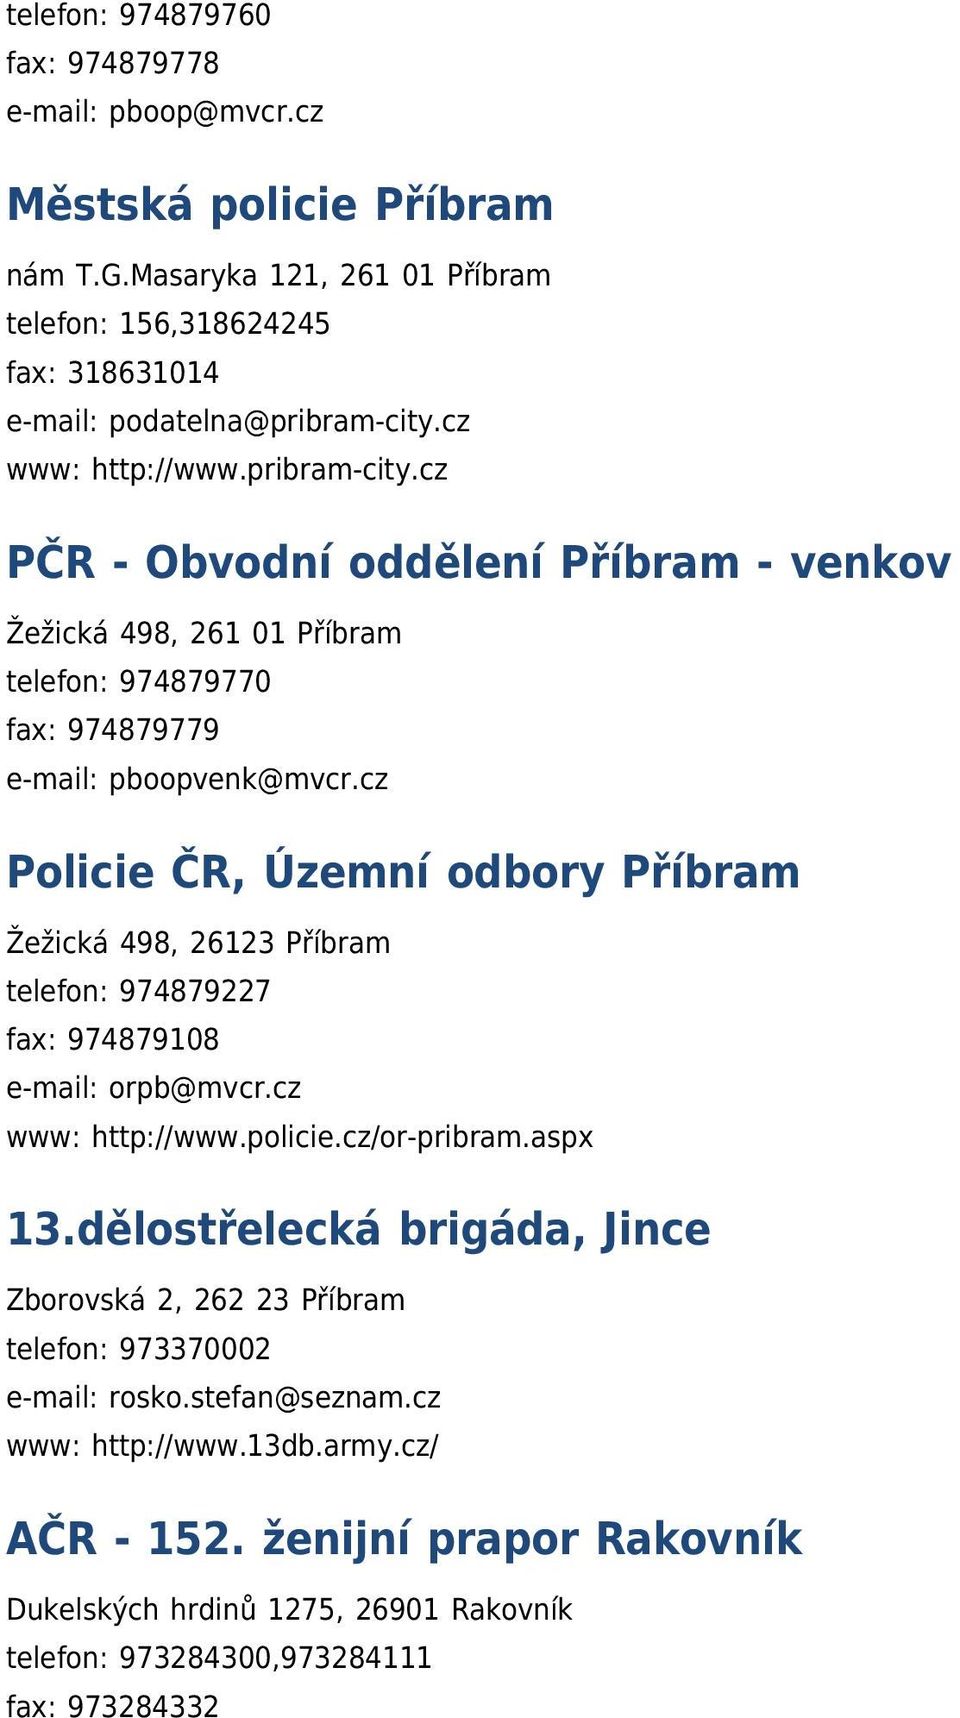 cz Policie ČR, Územní odbory Příbram Žežická 498, 26123 Příbram telefon: 974879227 fax: 974879108 e-mail: orpb@mvcr.cz www: http://www.policie.cz/or-pribram.aspx 13.